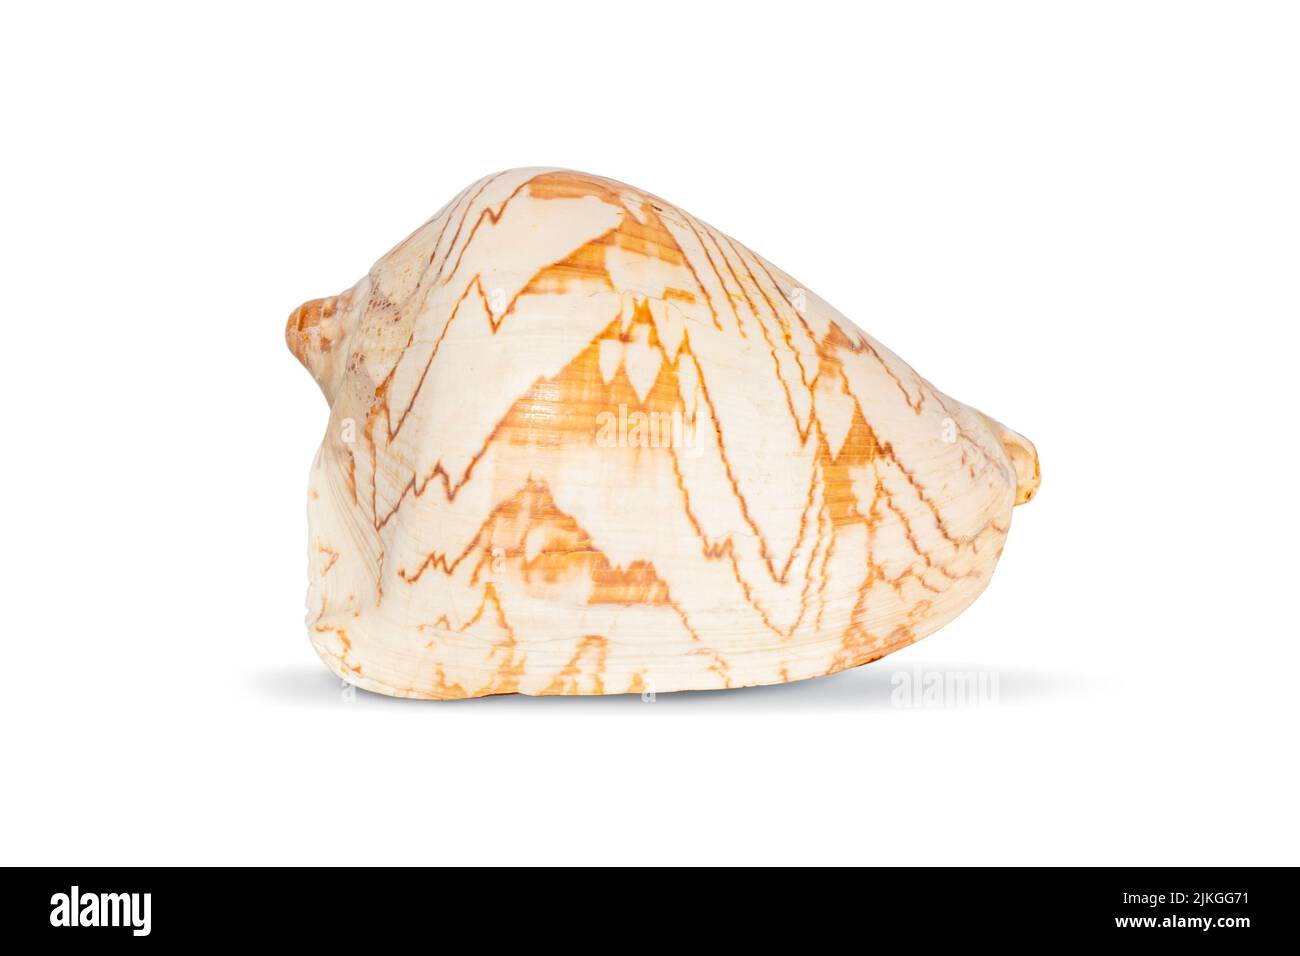 Image of andaman seashell (cymbiola nobilis) on a white background. Undersea Animals. Sea shells. Stock Photo